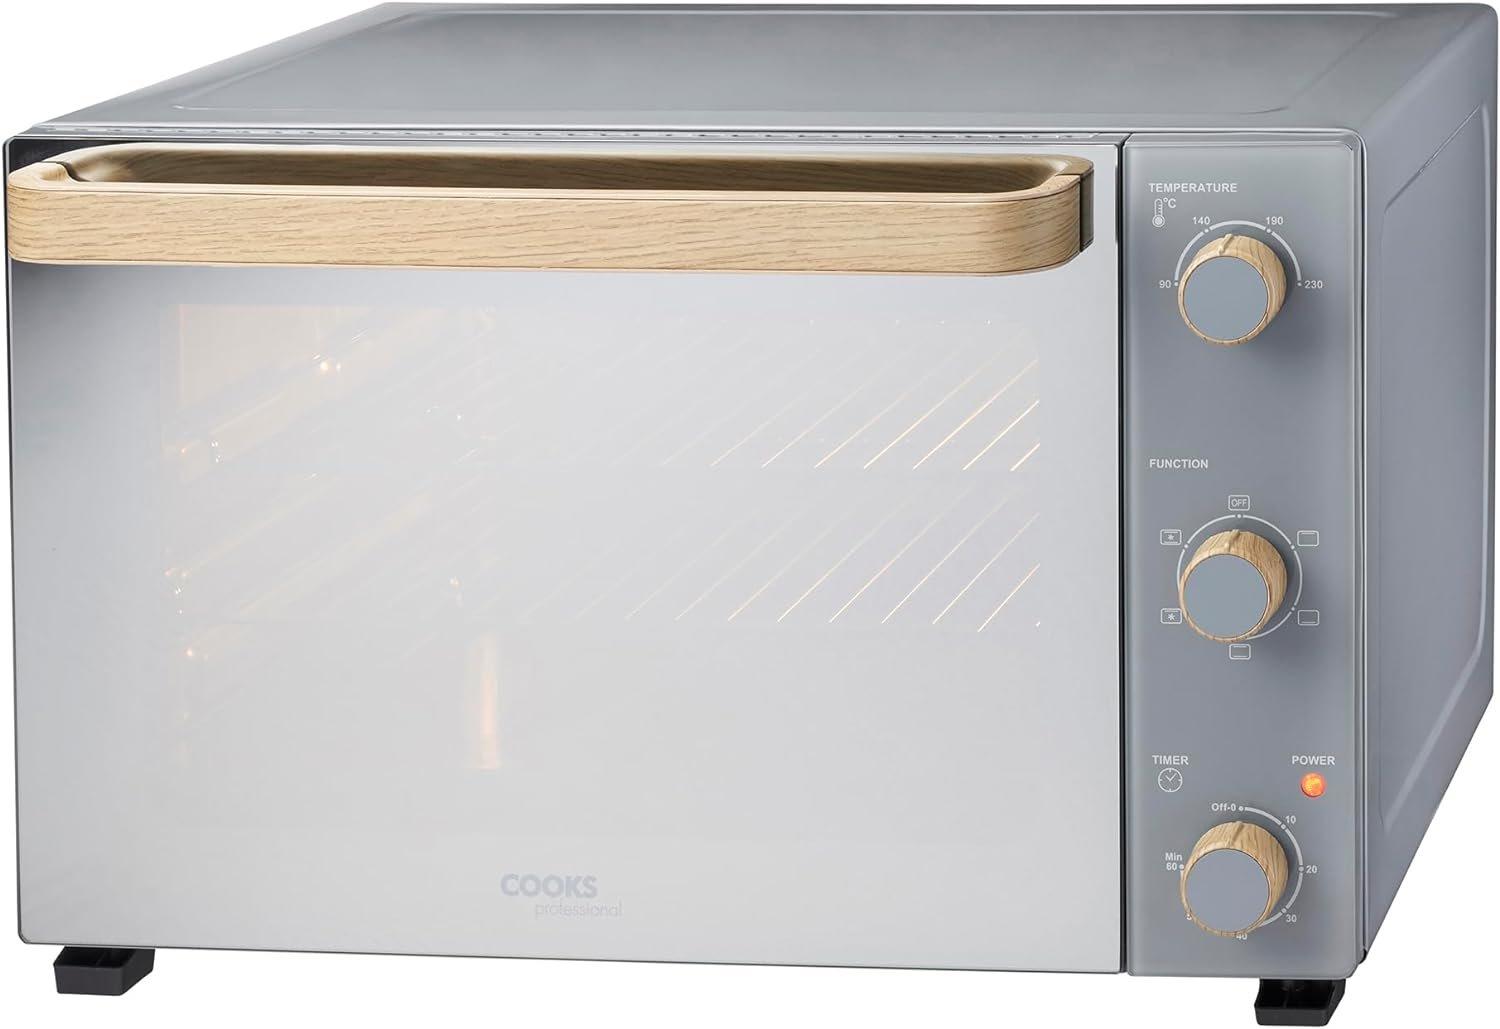 Mini Oven Electric Multi Function Countertop Cooker 48L Capacity Adjustable Temperature Control & Ti